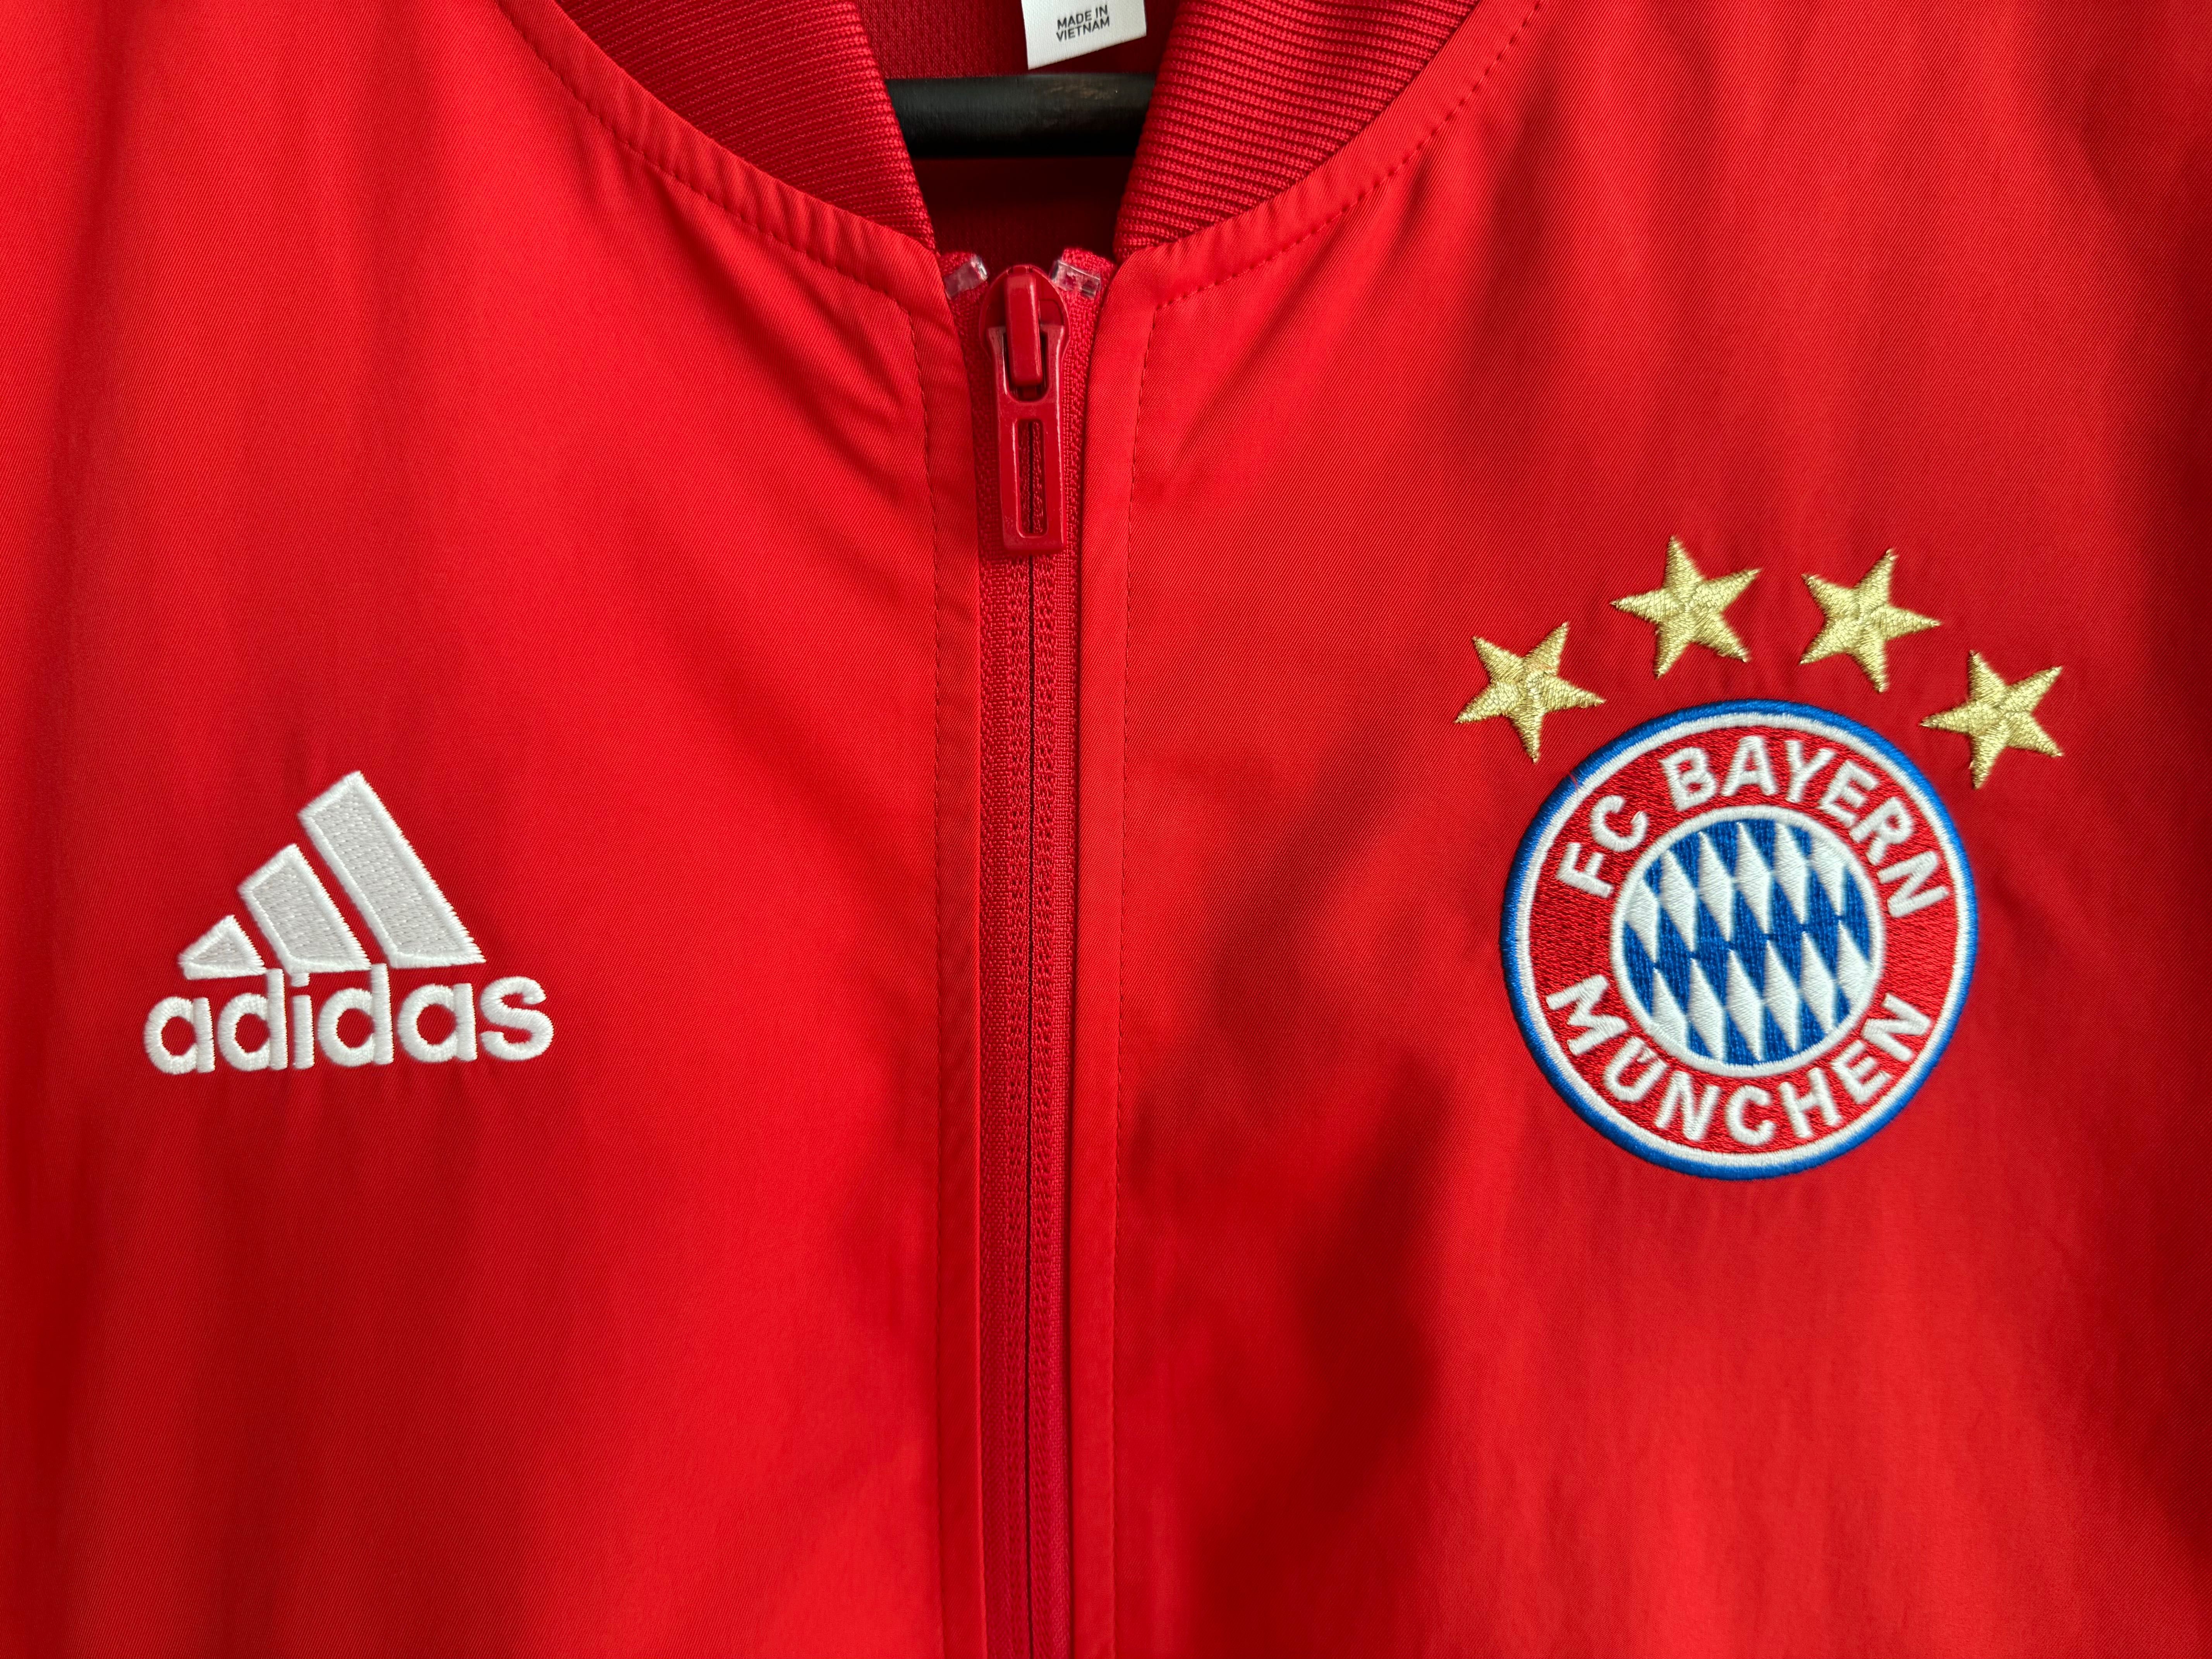 Adidas FC Bayern München мужская куртка ветровка бомбер размер S Б У